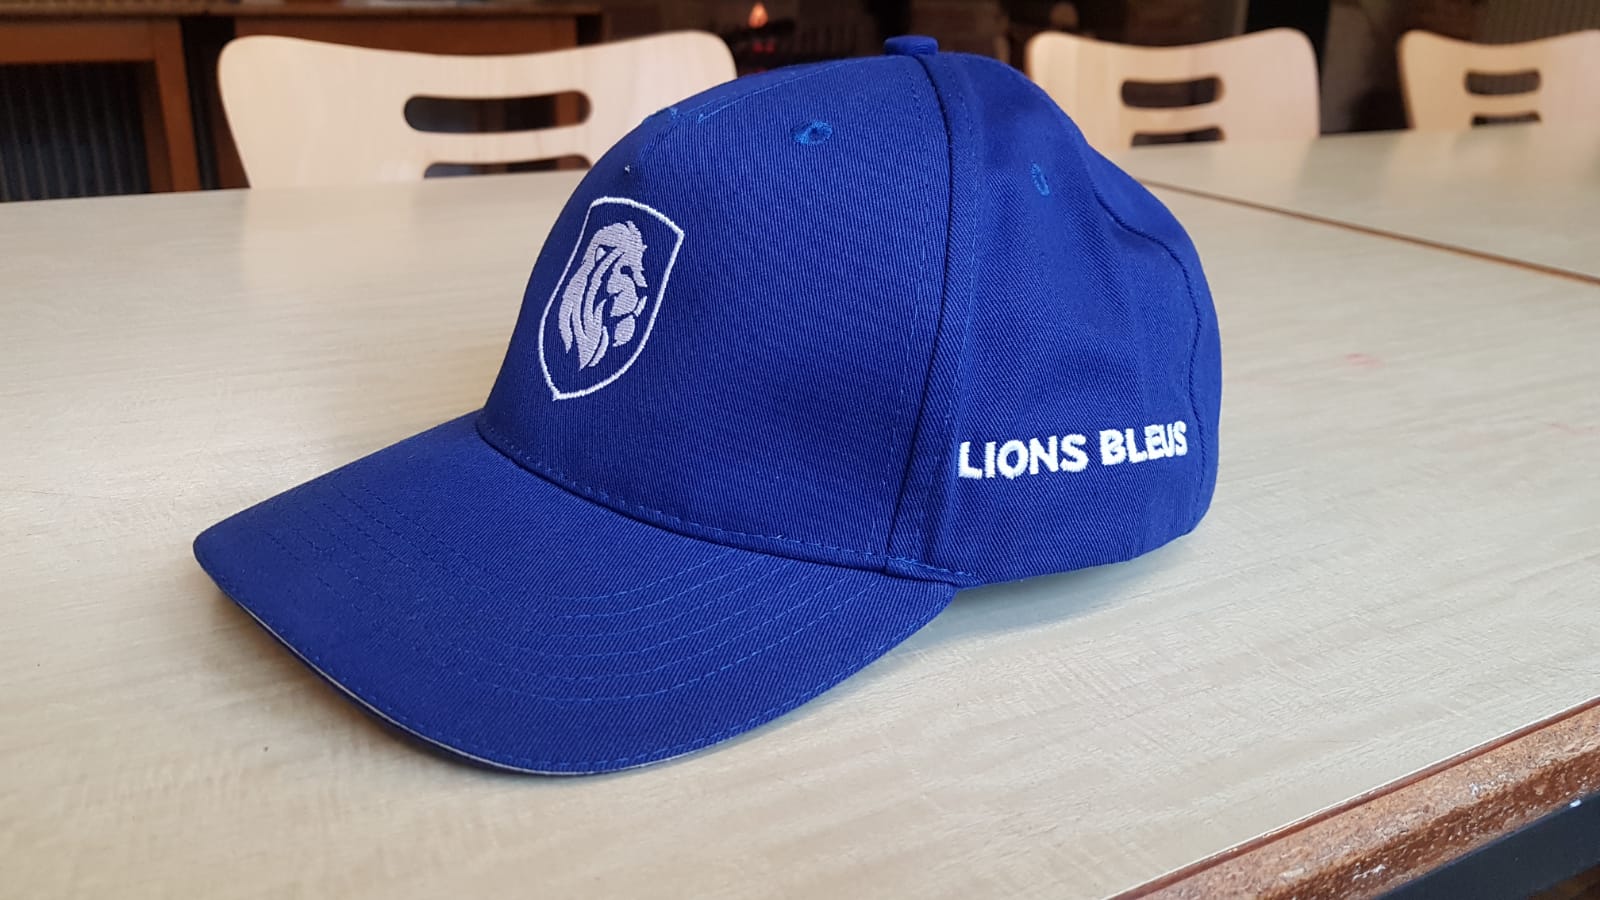 Kaap Lions Bleus - 12 EUR